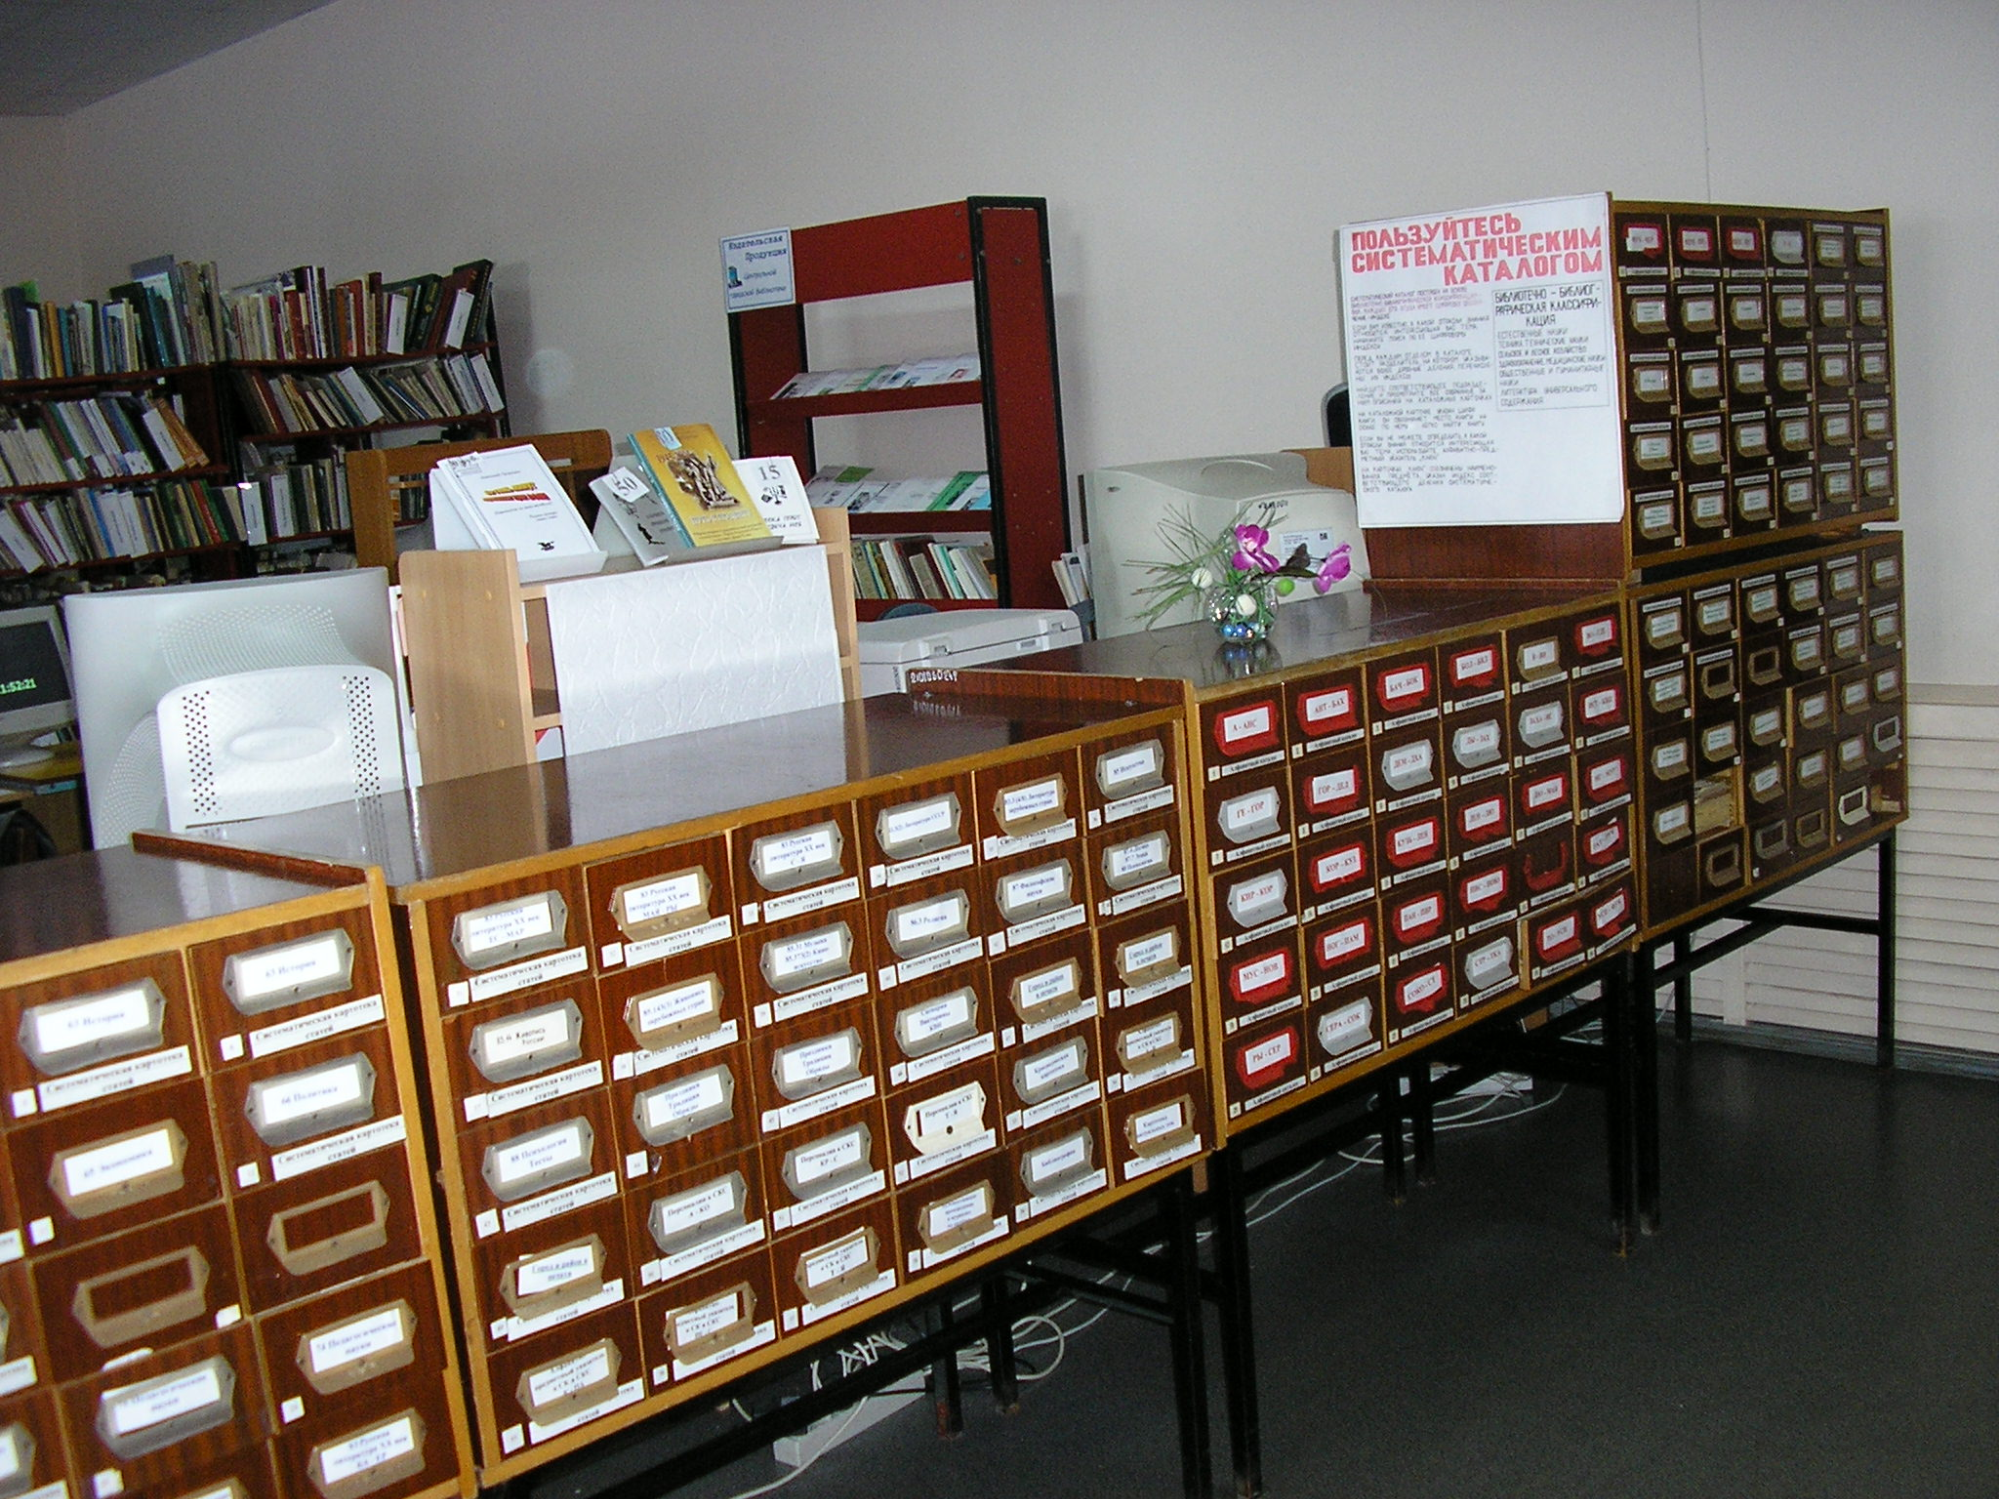 Информационных системах библиотеках архивах фондах. Картотека в библиотеке. Библиотечный каталог. Зал каталогов в библиотеке. Система каталогов в архиве.